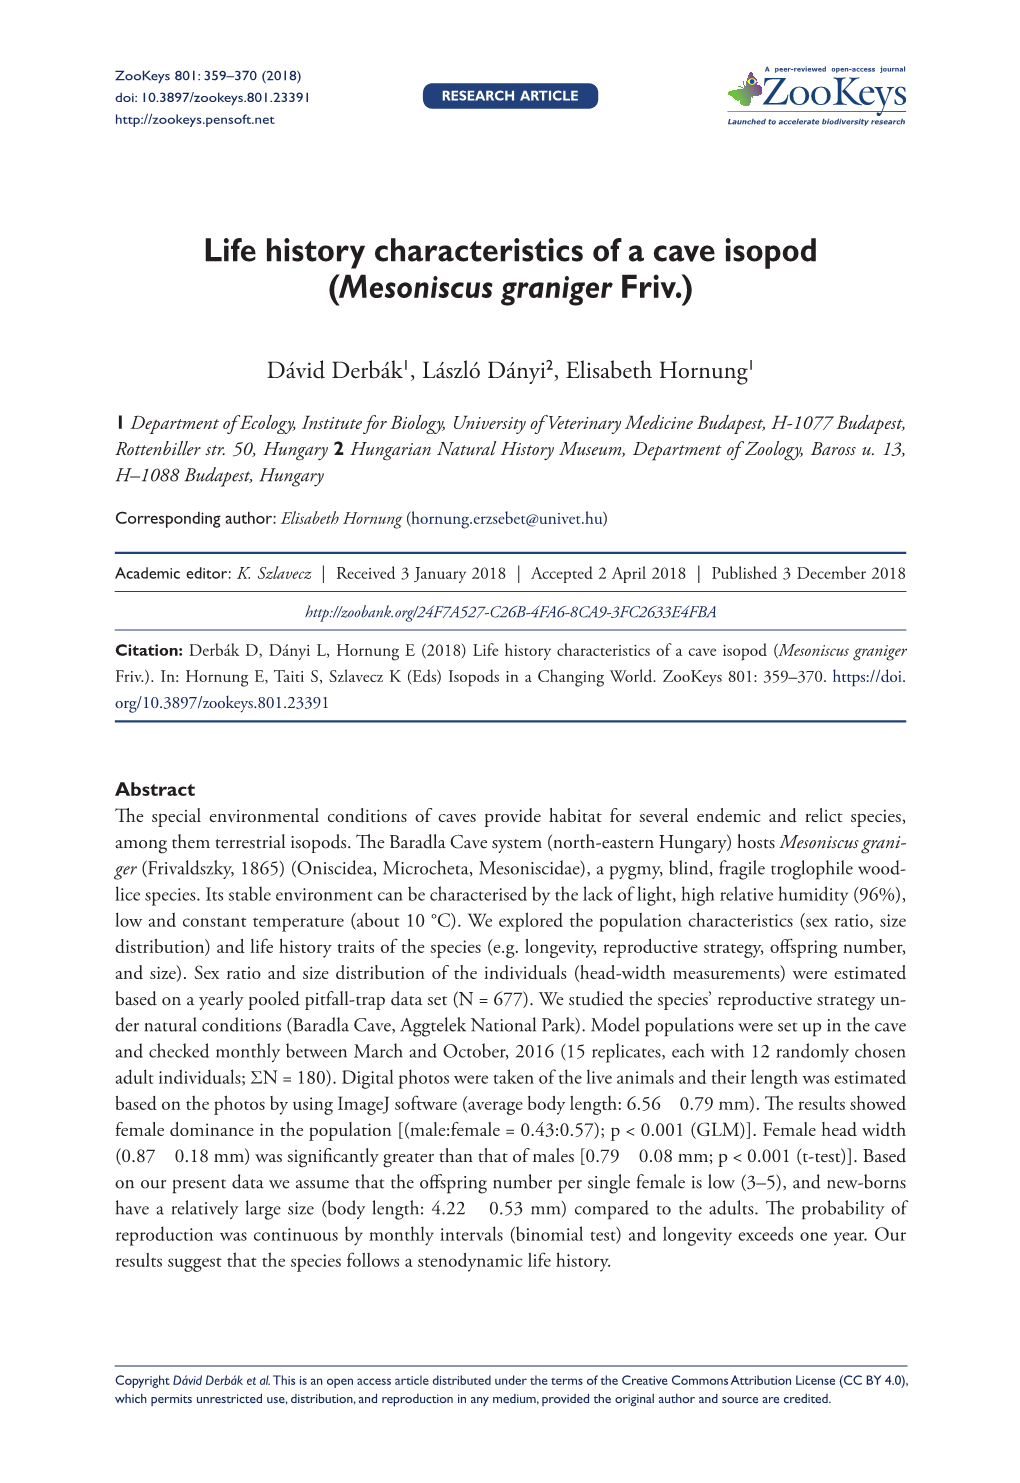 Life History Characteristics of a Cave Isopod (Mesoniscus Graniger Friv.)